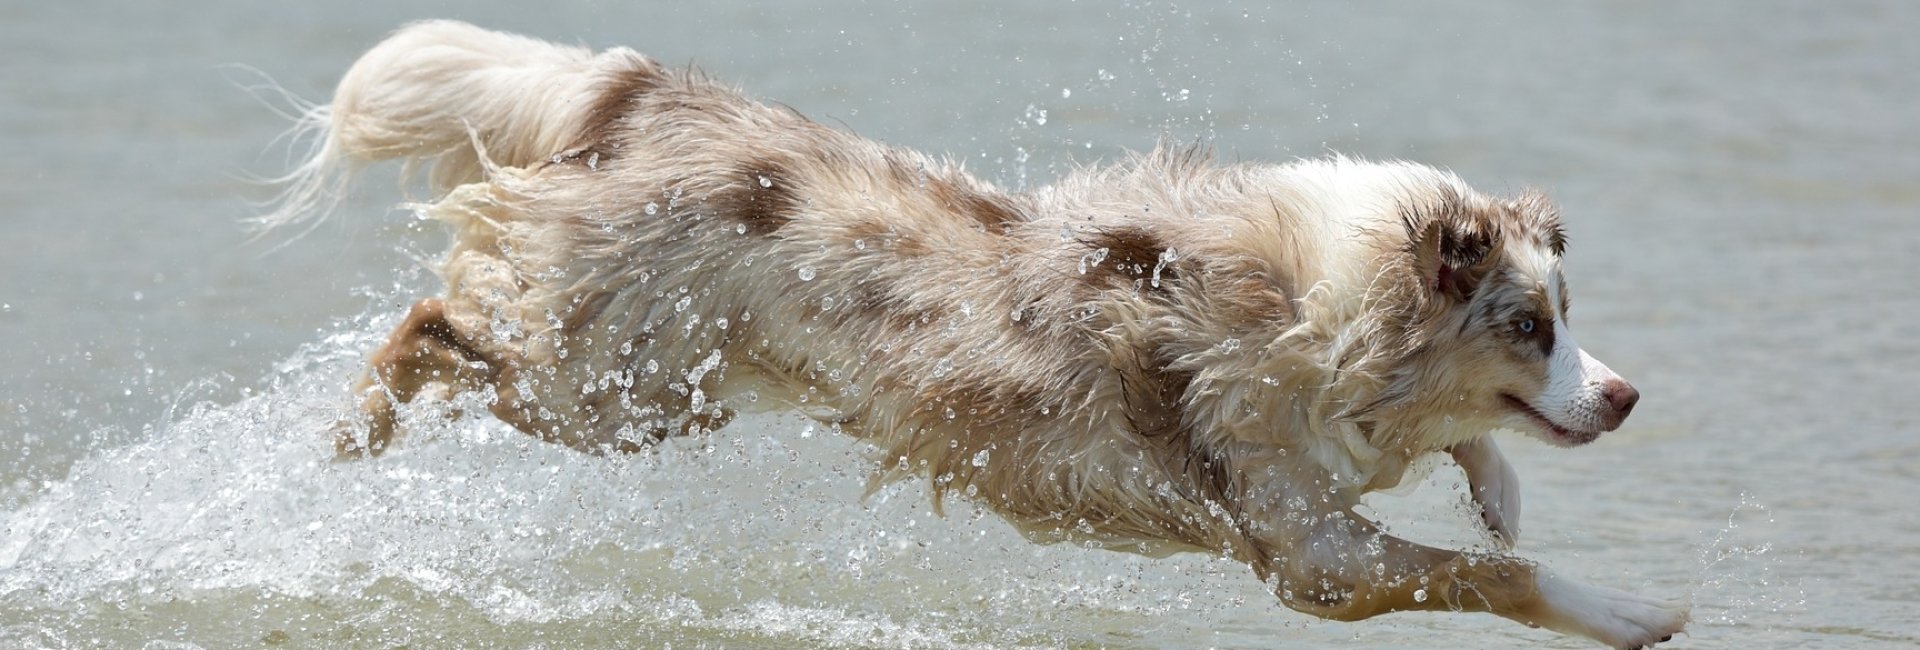 rennende hond water